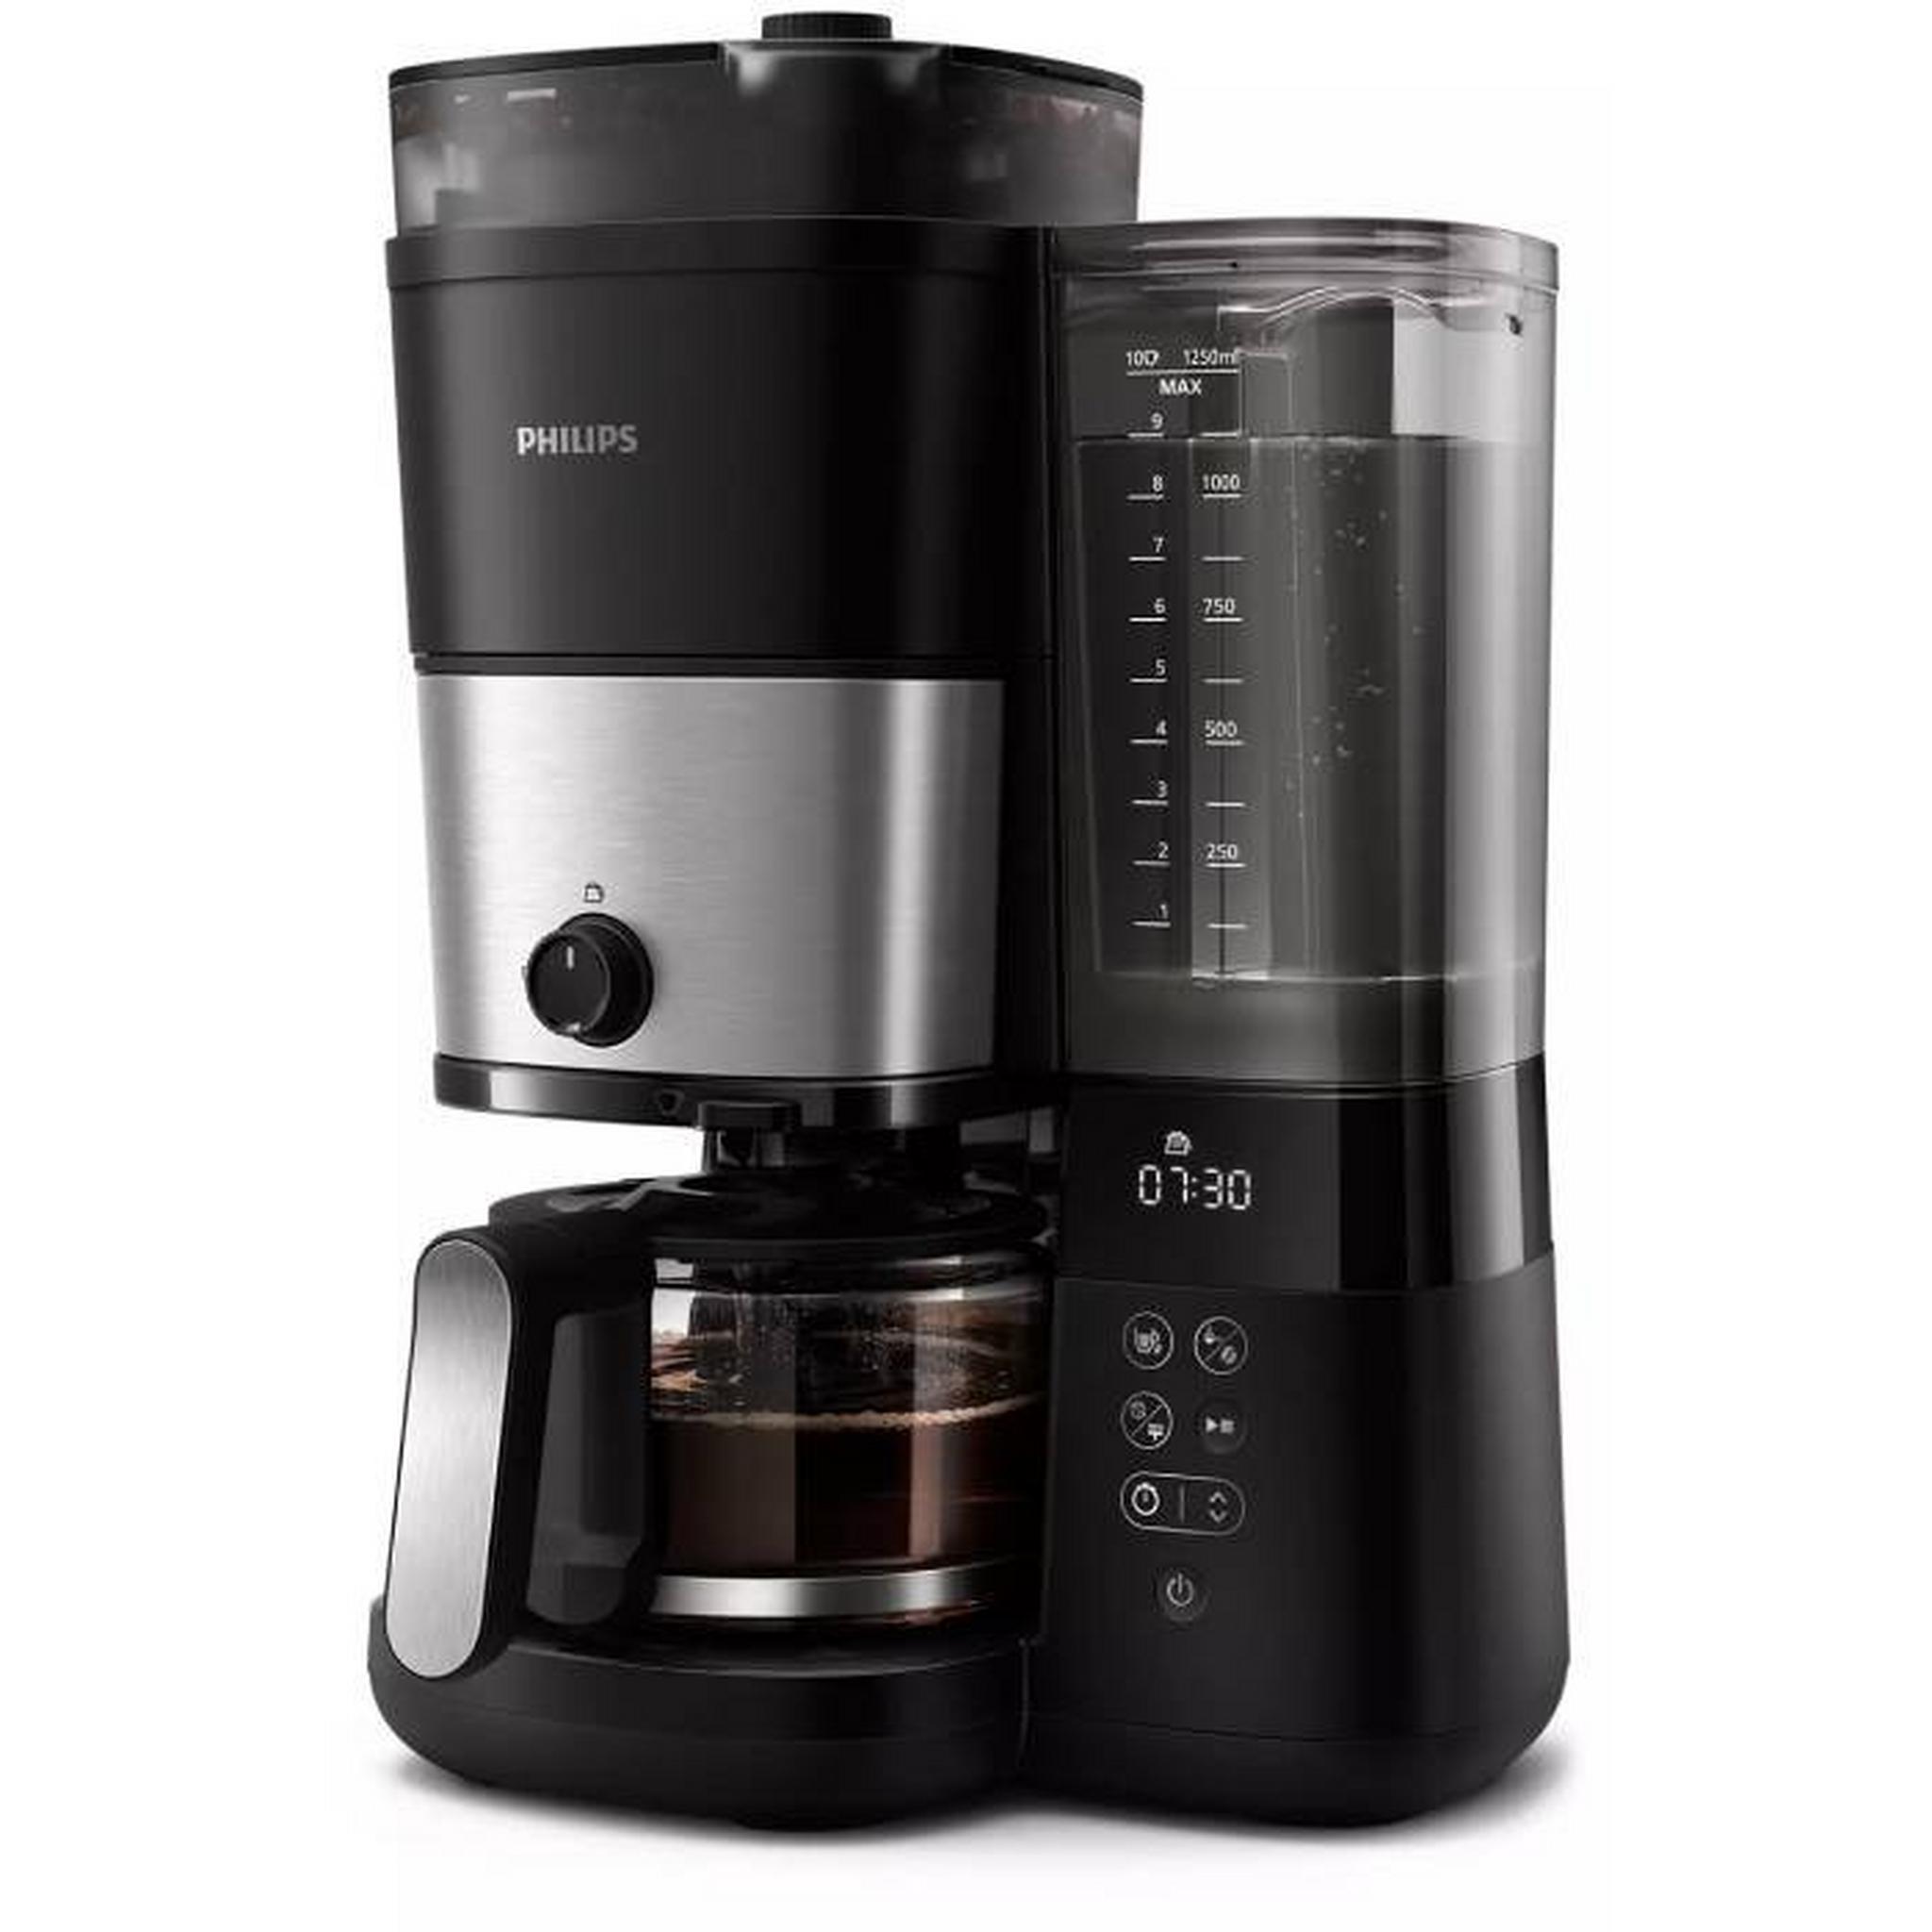 Philips All-in-1 Brew Coffee Maker, 1.25L, HD7900/50 – Black